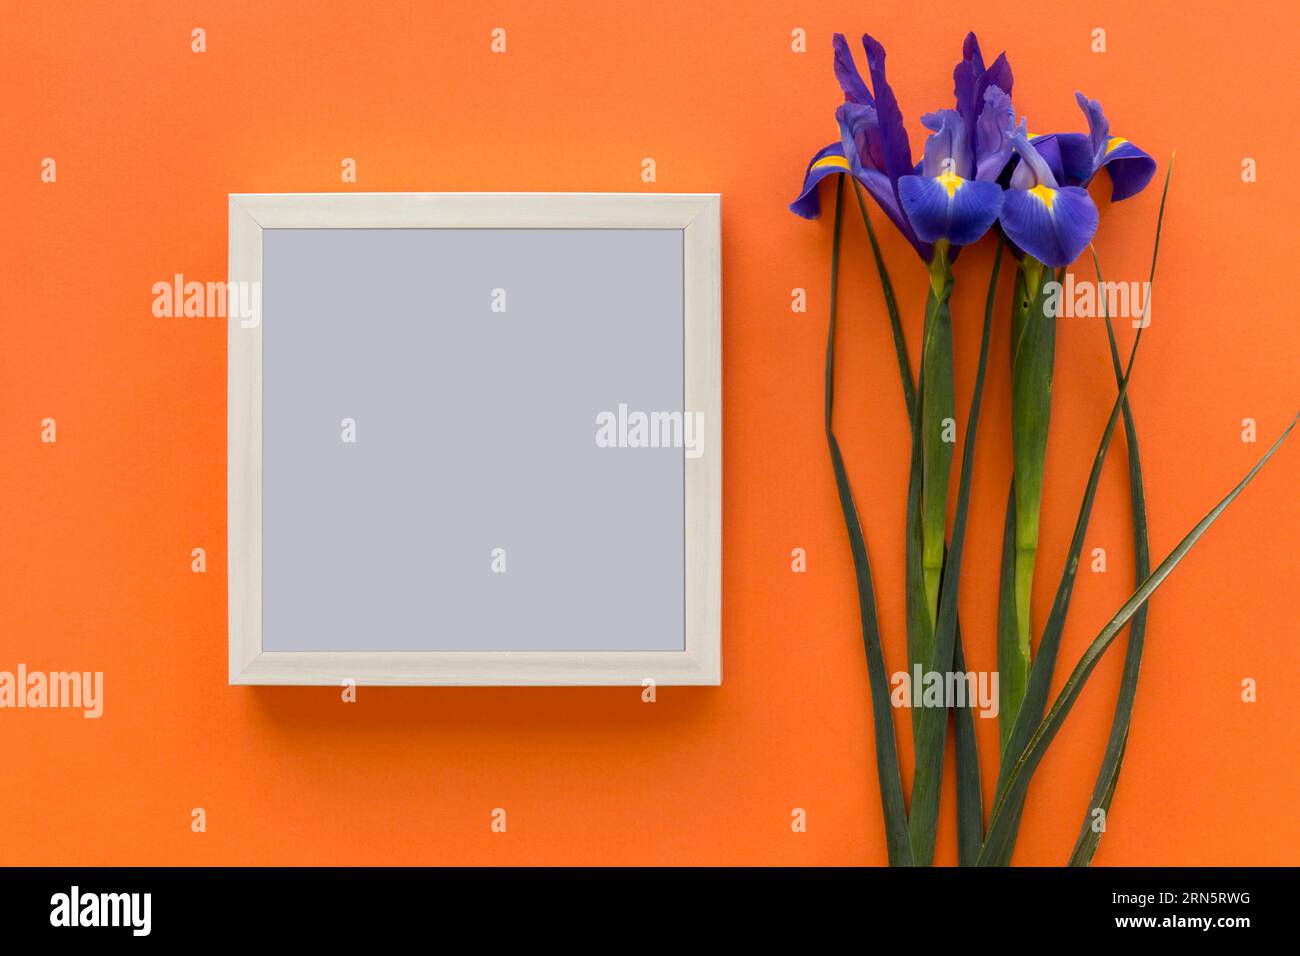 Iris purple flower black picture frame against bright orange backdrop Stock Photo